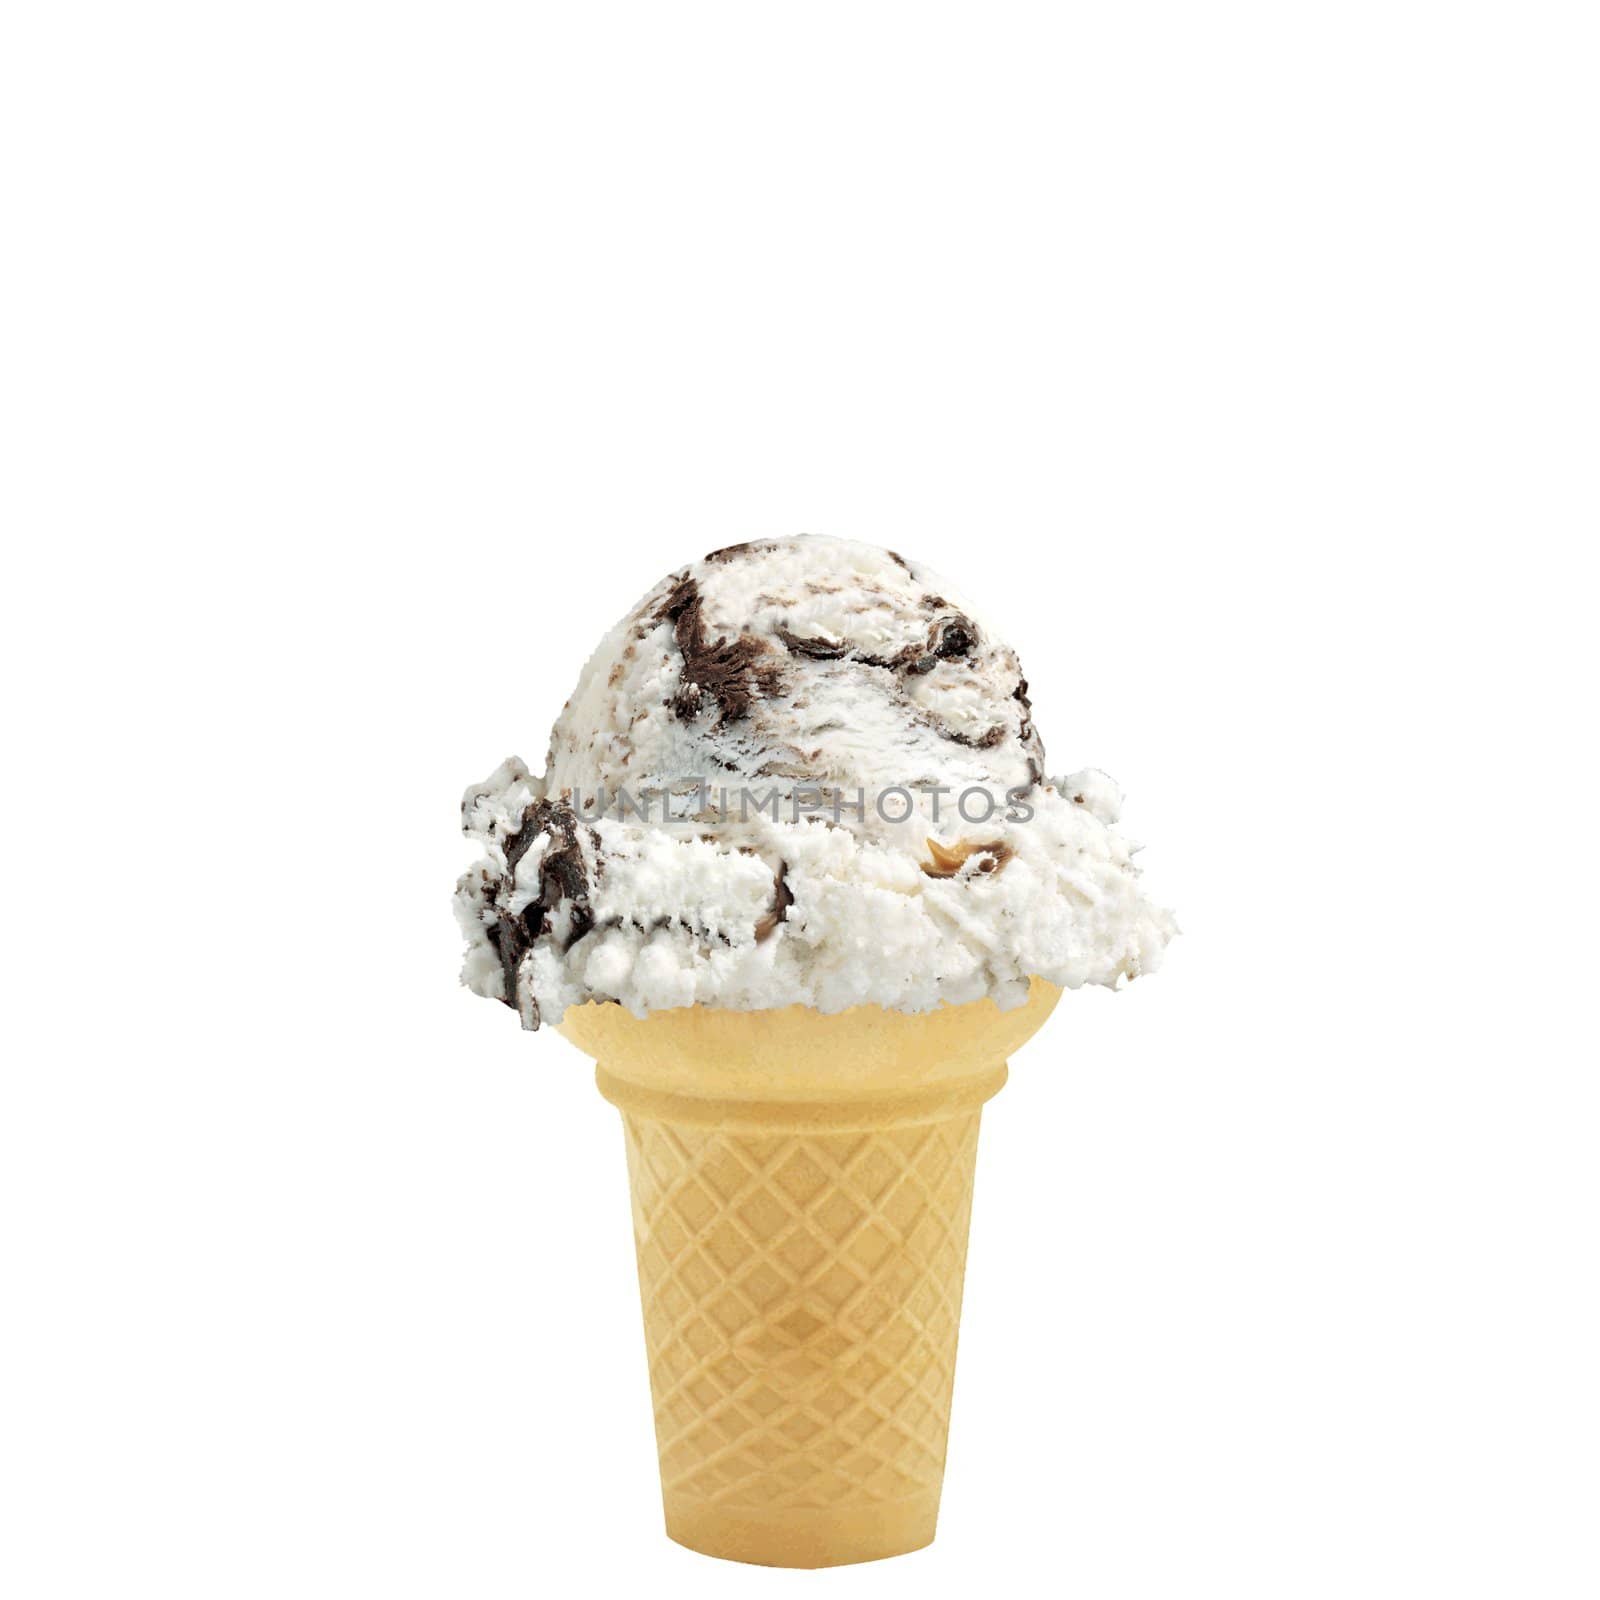 ice cream in a sugar cone isolated on white by ozaiachin